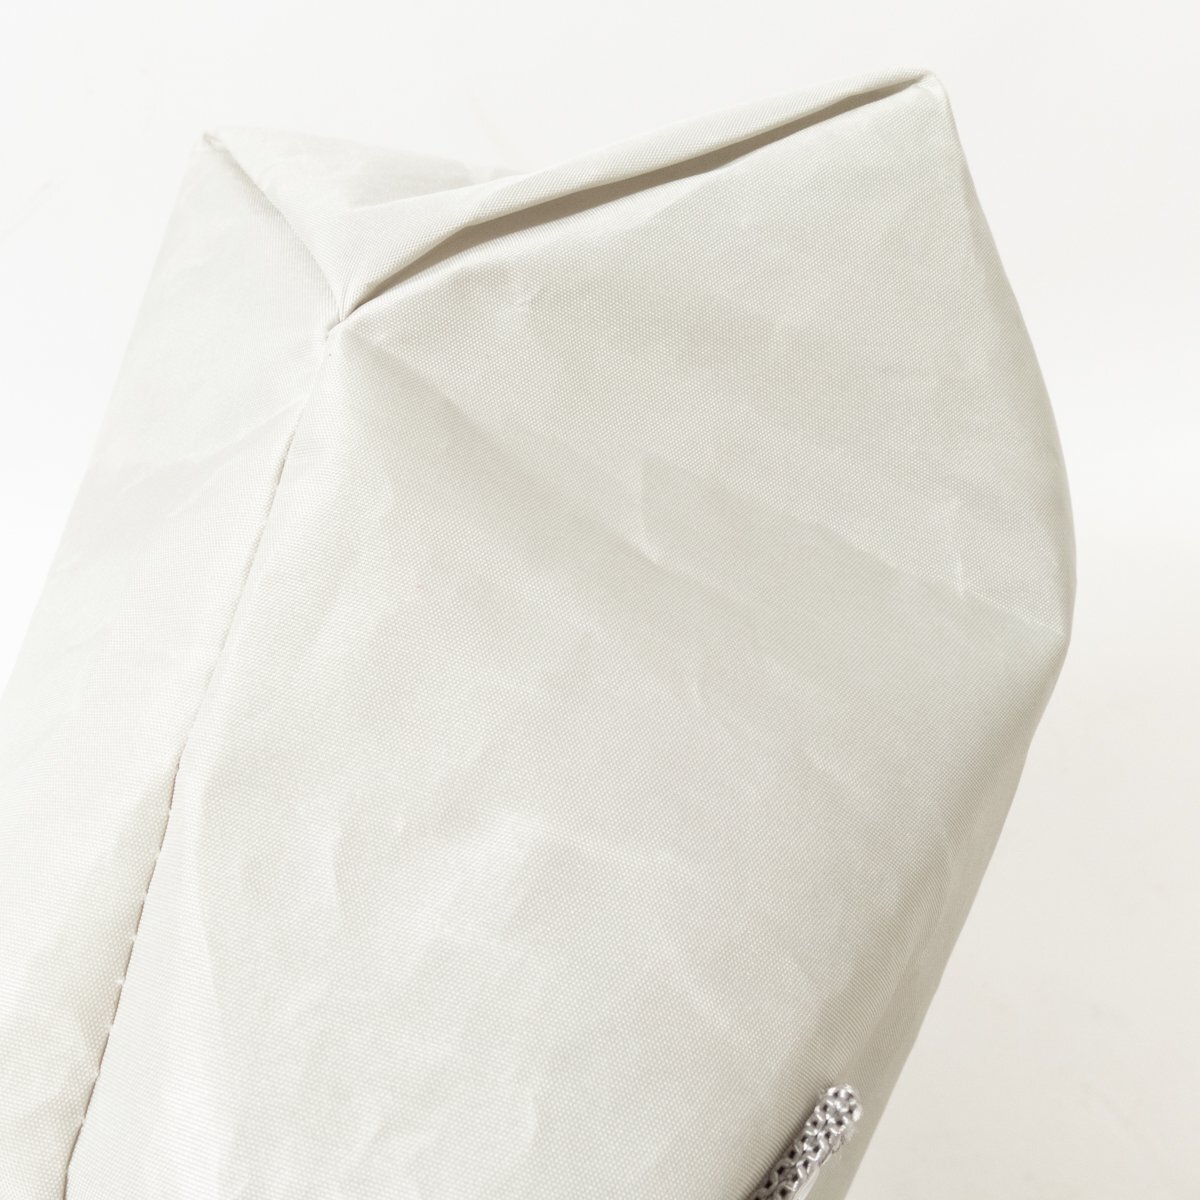 [1 иен старт ]JIBjib2WAY сумка на плечо большая сумка серый серый Sale Cross женский наклонный .. рука .. casual bag сумка 